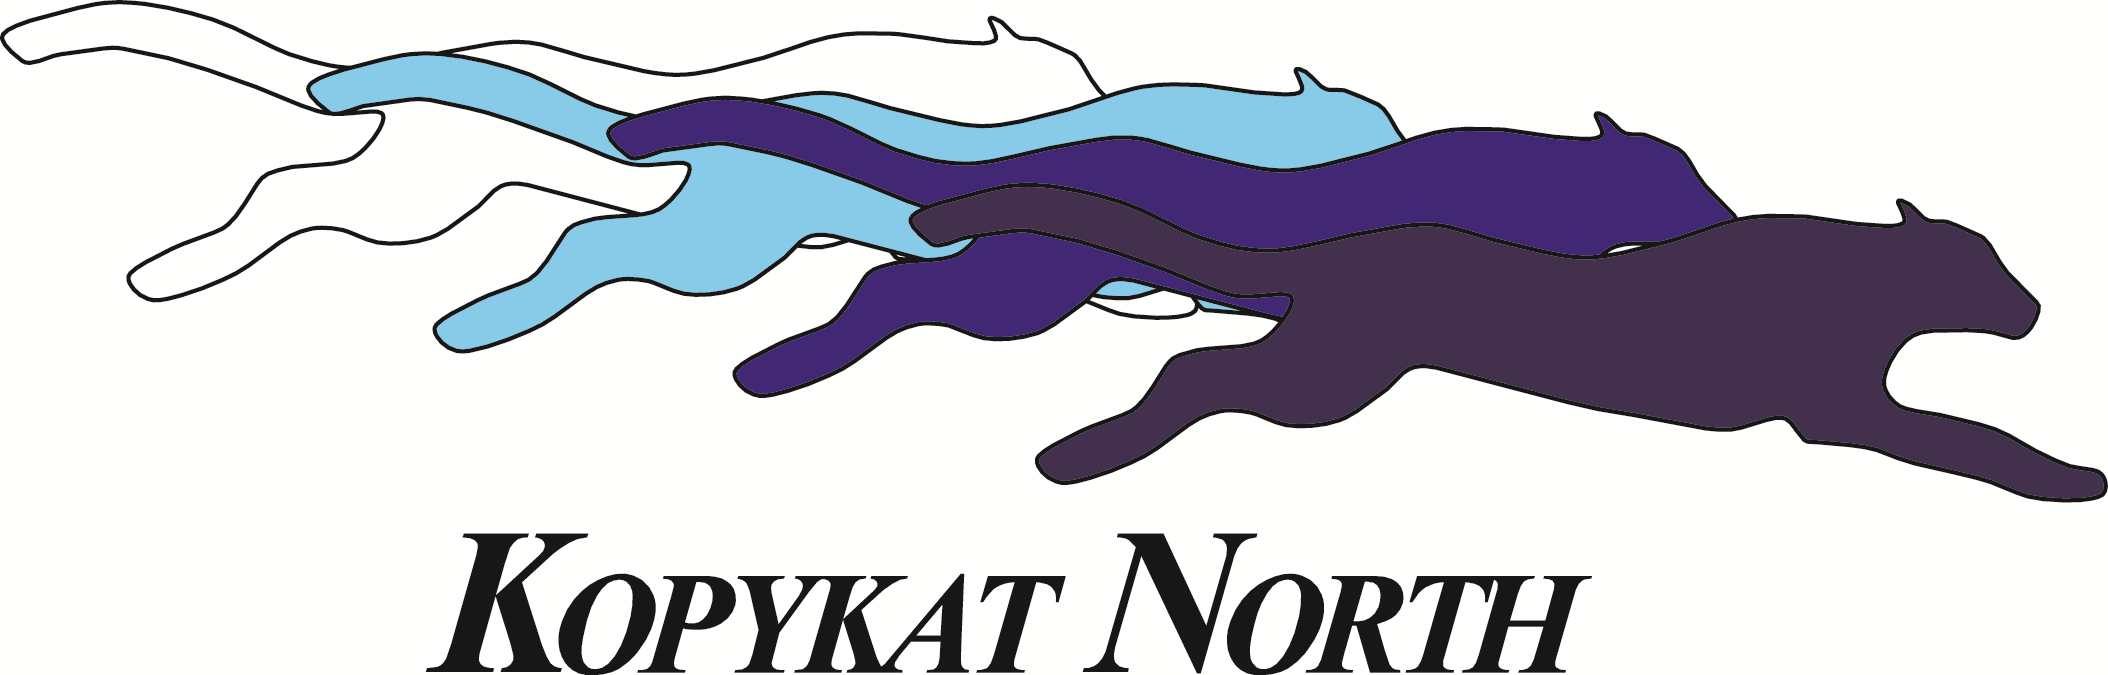 A logo of the spykat nori company.